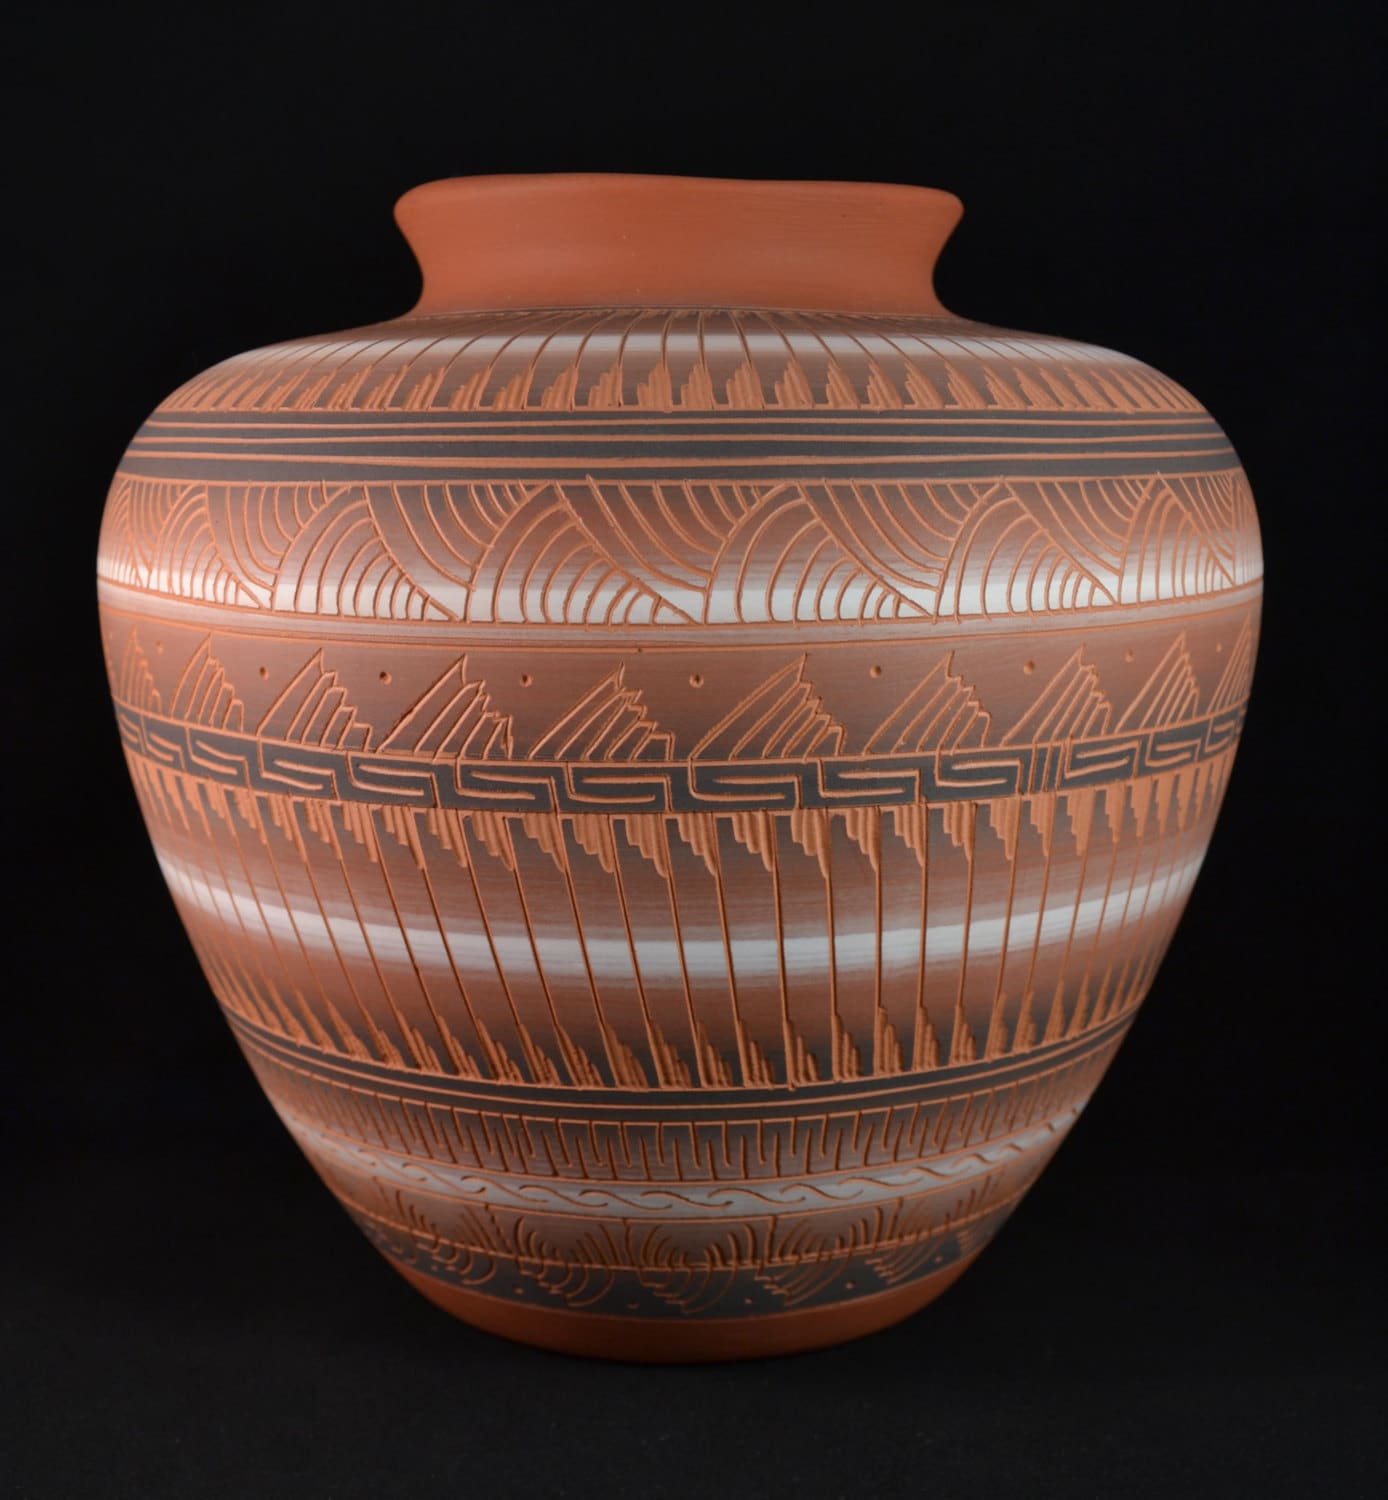 On Sale Carved Navajo Pottery Vase Signed by the Artist Vi